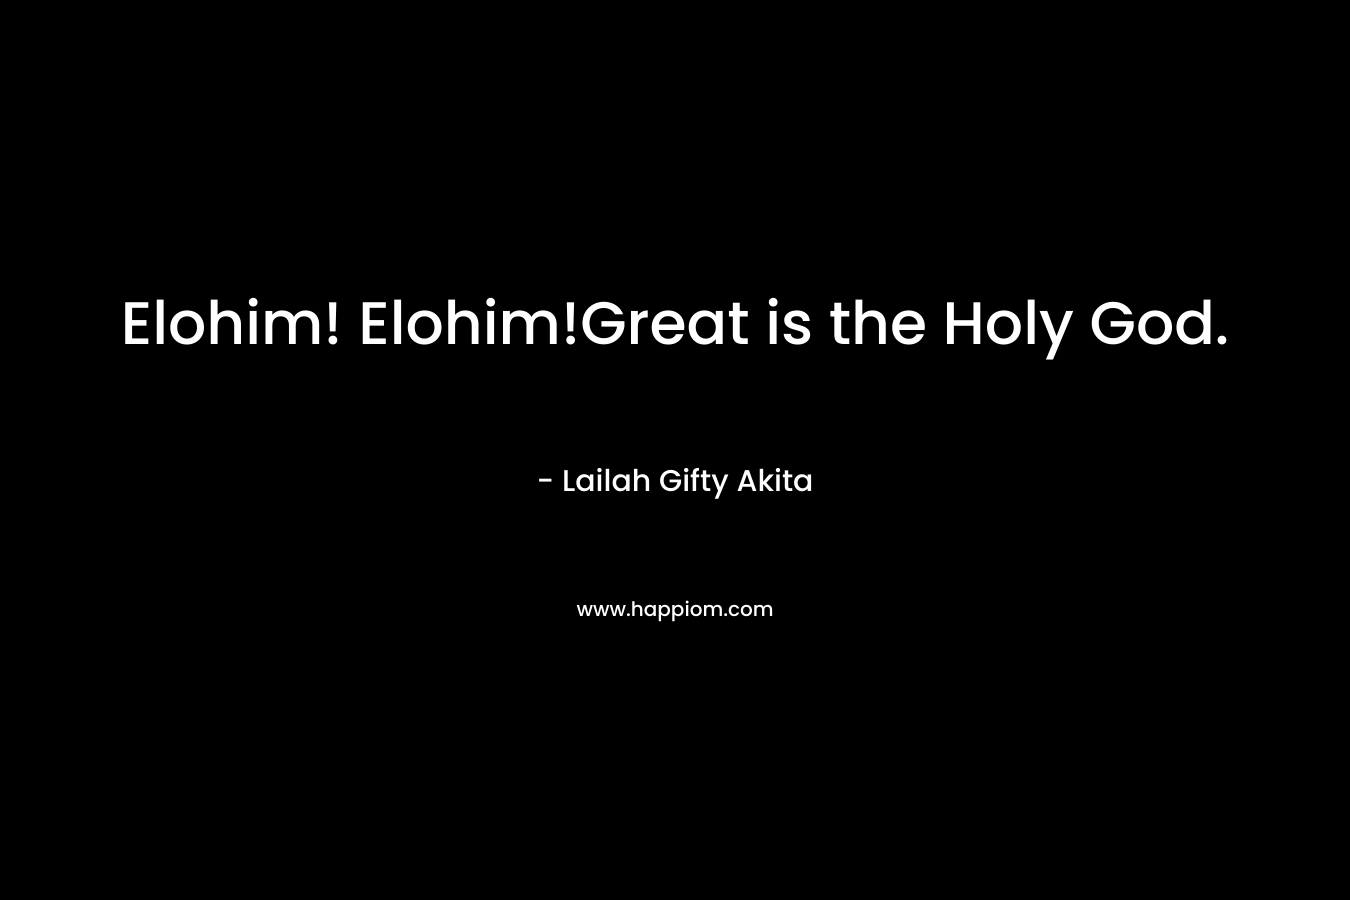 Elohim! Elohim!Great is the Holy God.